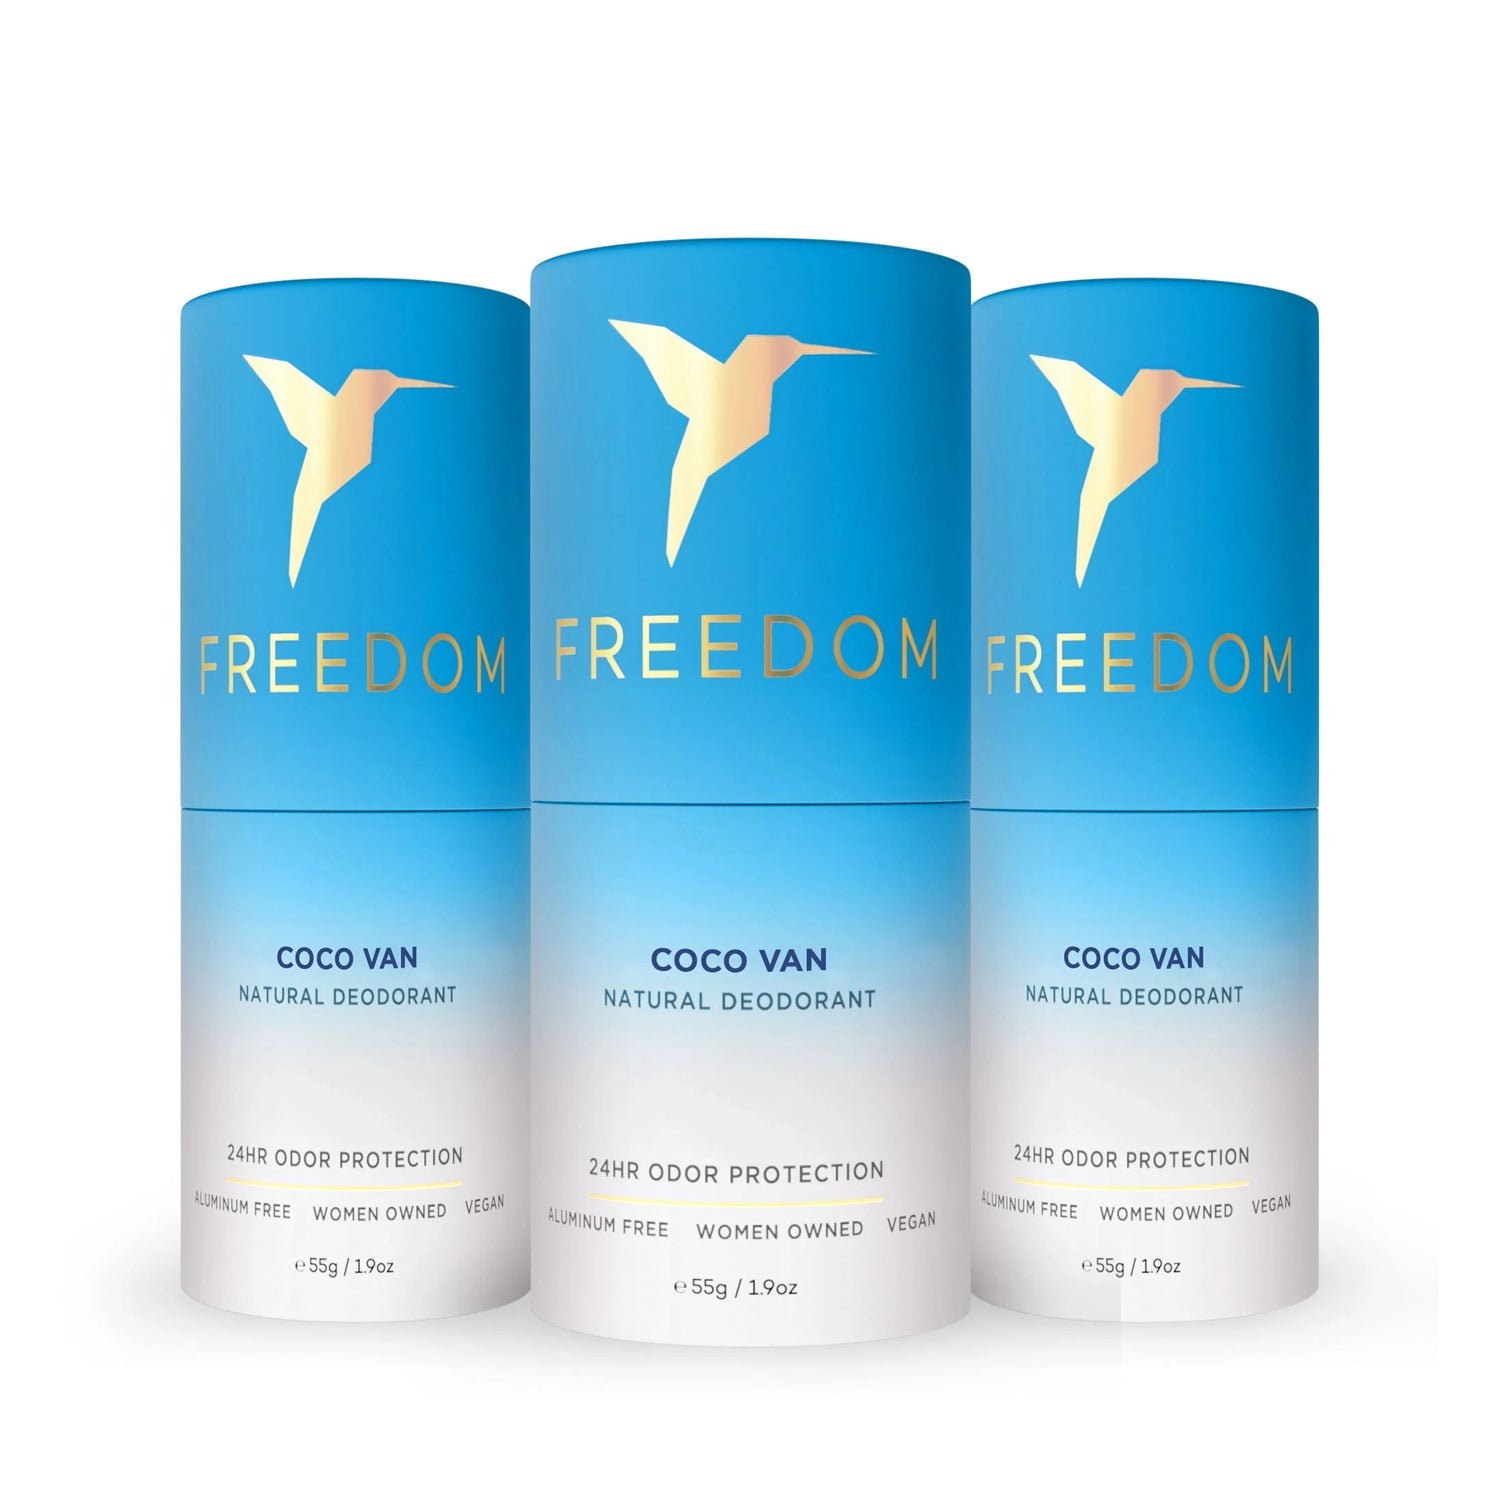 All Natural Deodorant - Eco Friendly! Deodorant Freedom Coco-Van (Eco-Friendly Paper) 3-Pack 